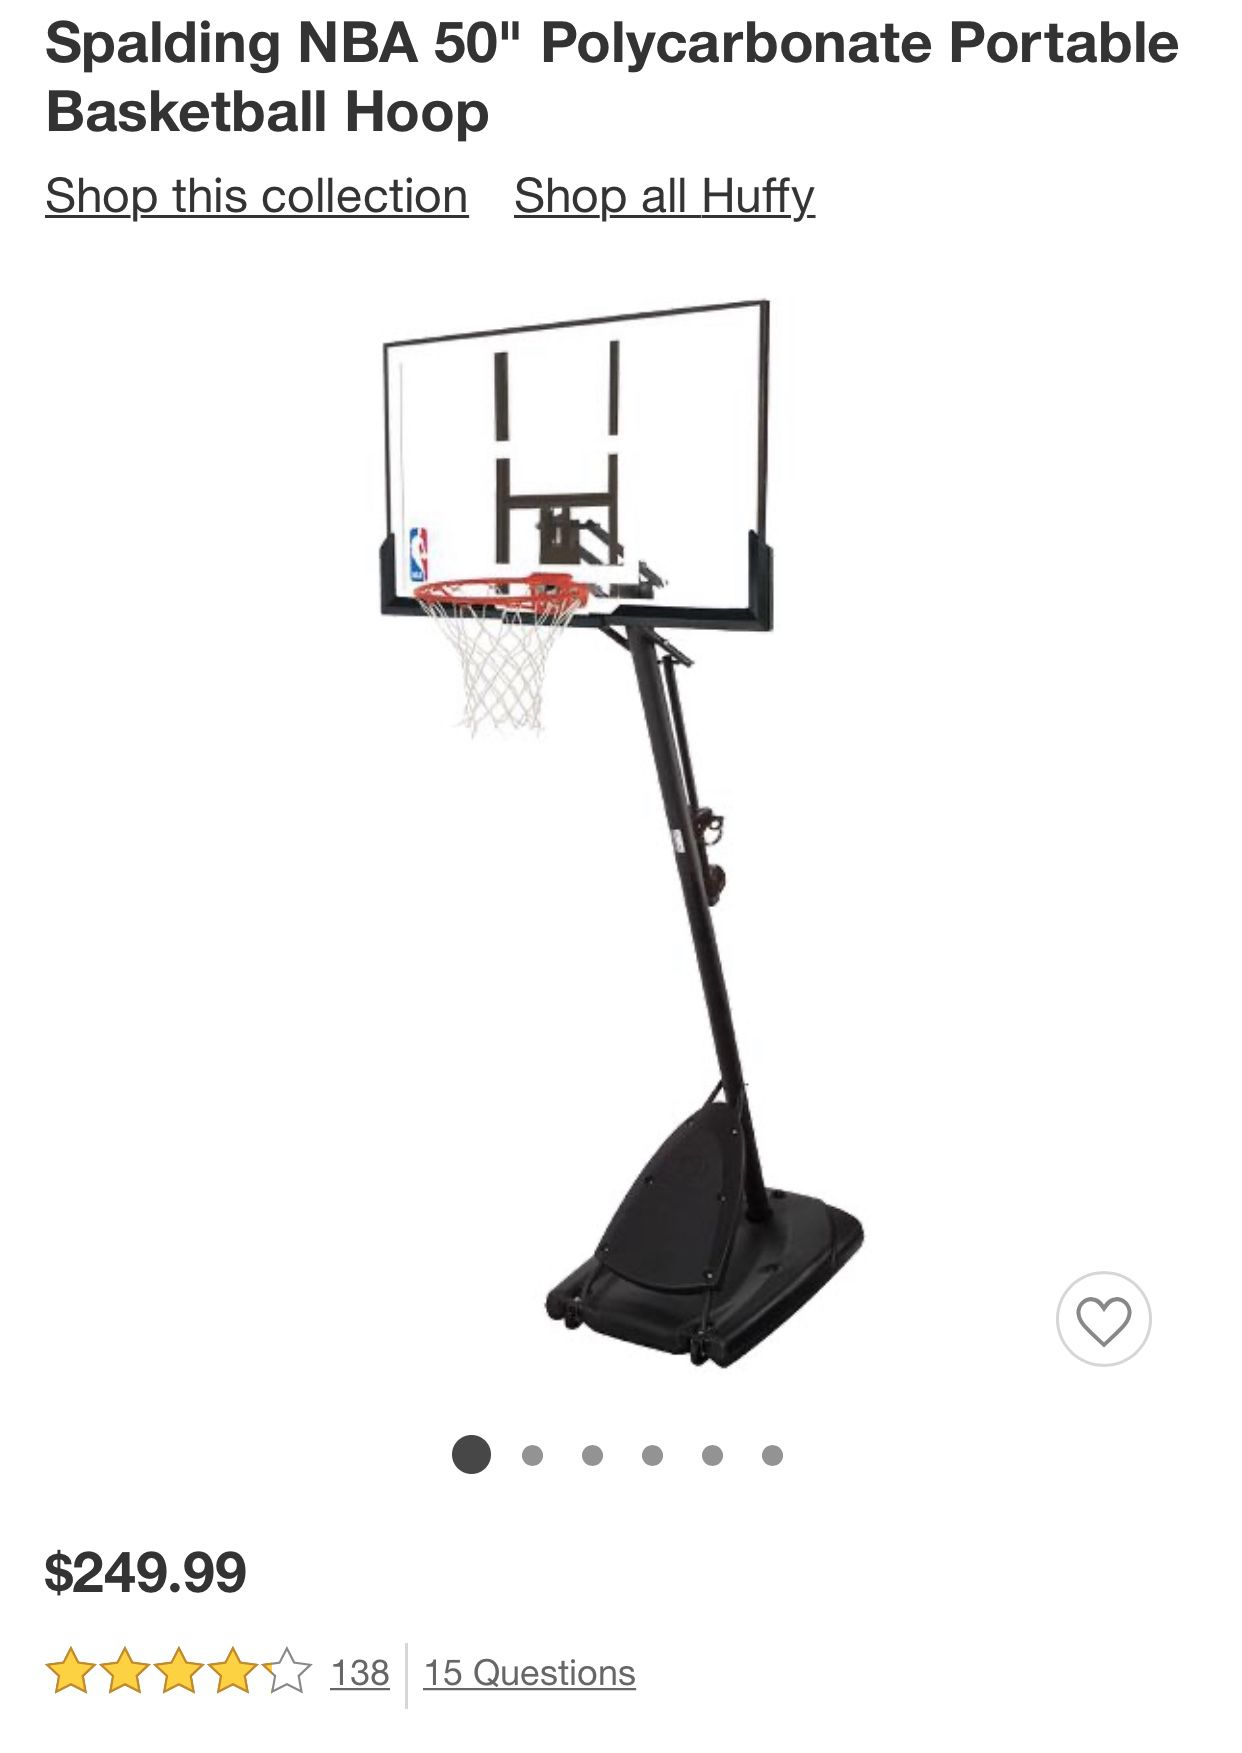 Spalding portable Basketball Hoop